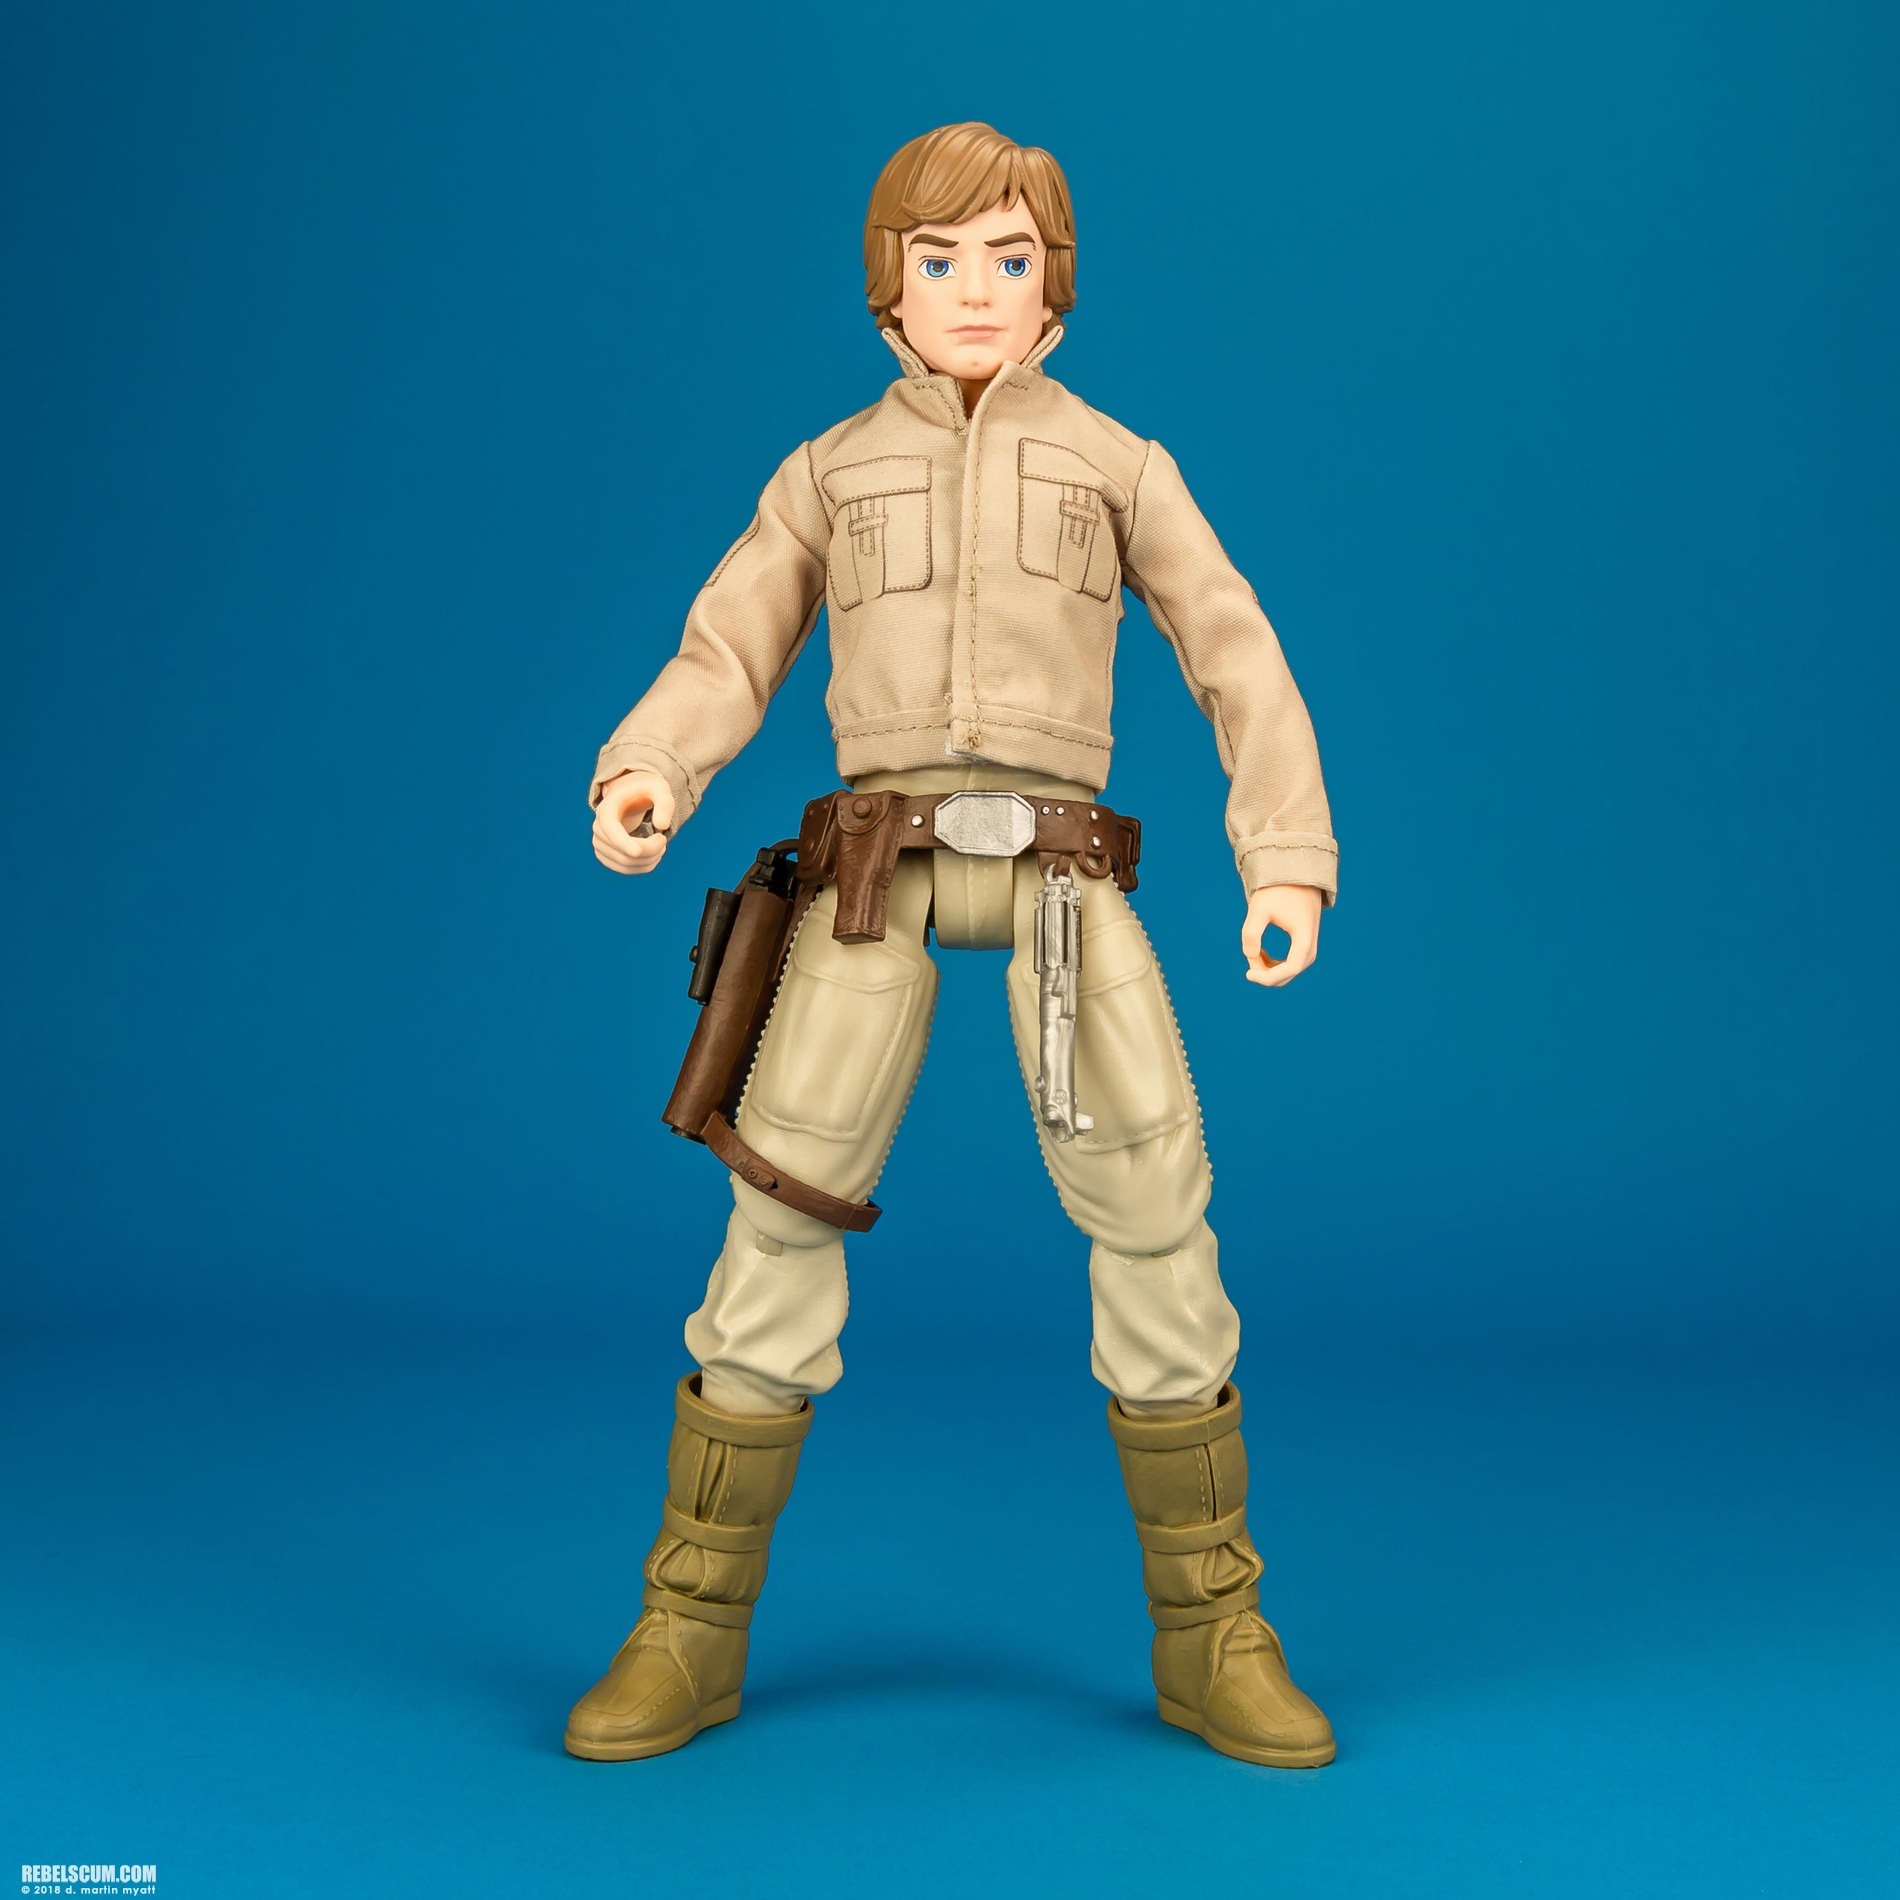 Luke-Skywalker-Yoda-Forces-Of-Destiny-Hasbro-Star-Wars-001.jpg